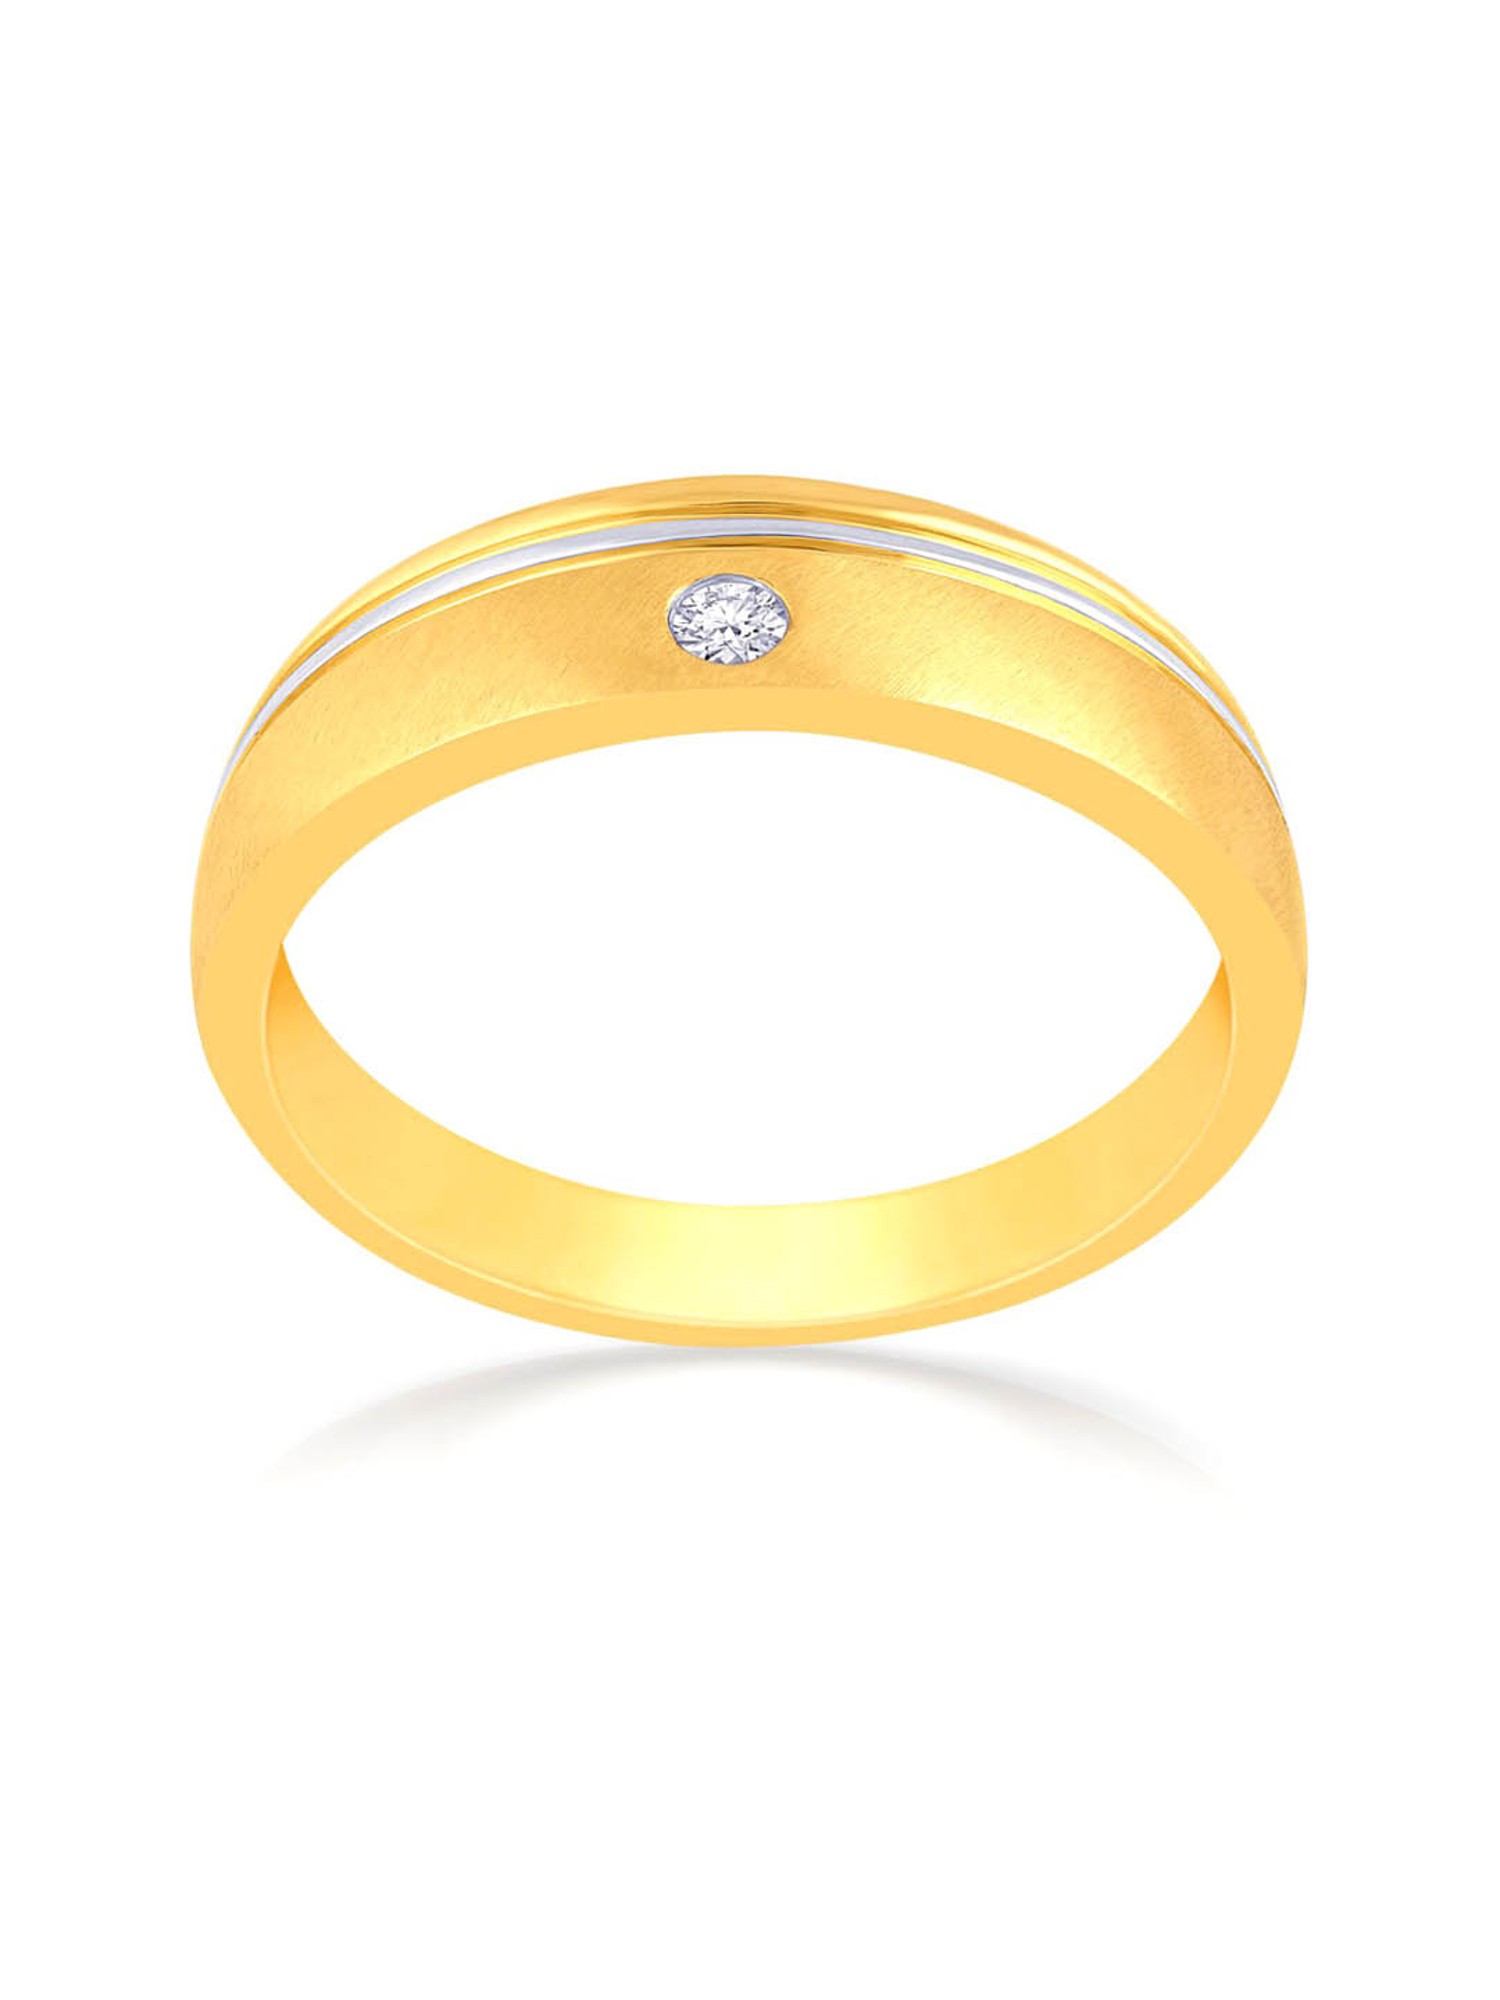 Buy Malabar Gold Ring RG1186827 for Women Online | Malabar Gold & Diamonds